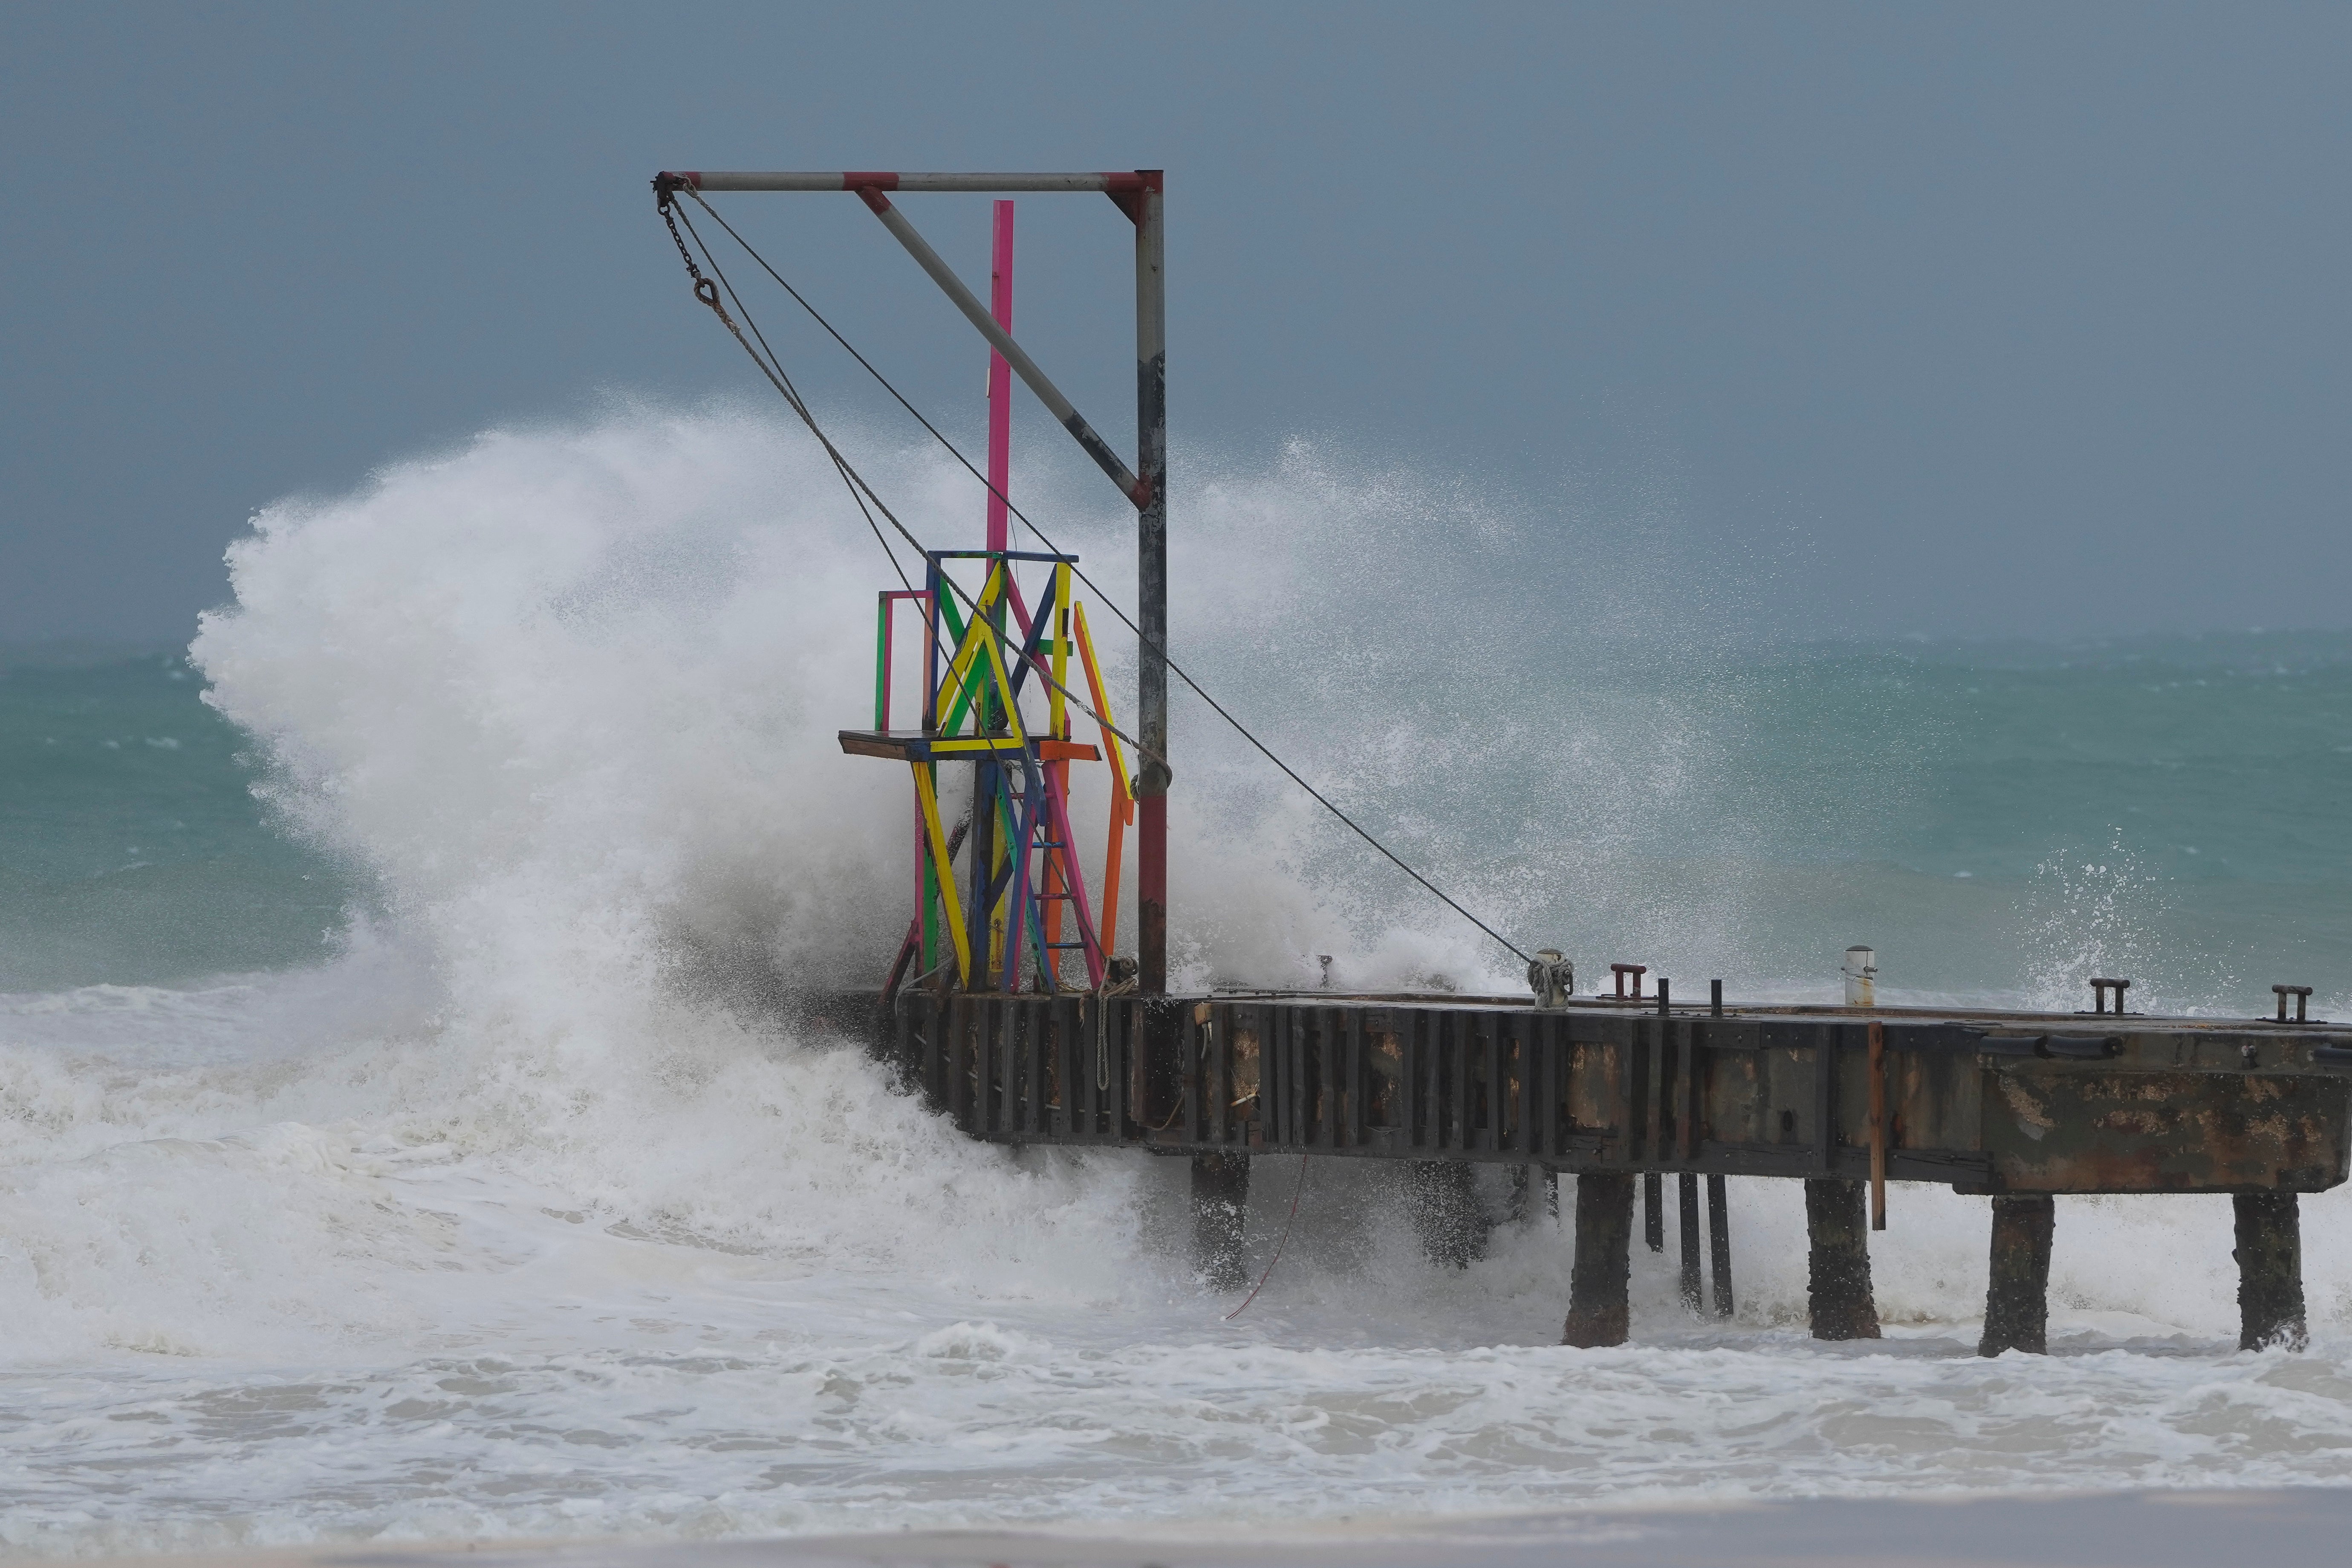 Waves hit a pier in Bridgetown, Barbados as Hurricane Beryl blows through on Monday